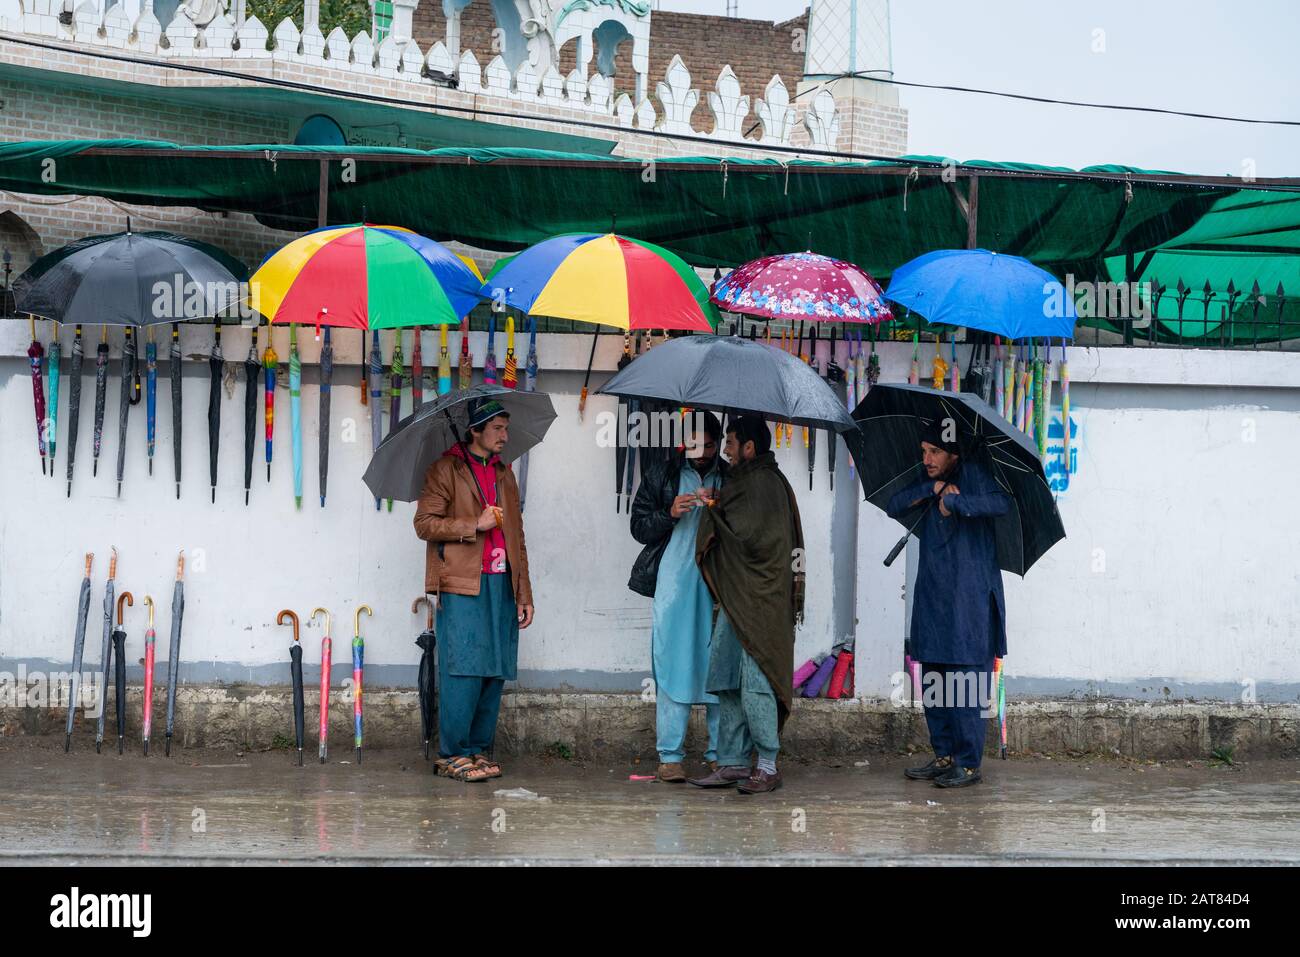 January 29, 2020 - KPK, Pakistan: Local residents purchasing umbrella from a street umbrella seller during rainy weather Stock Photo